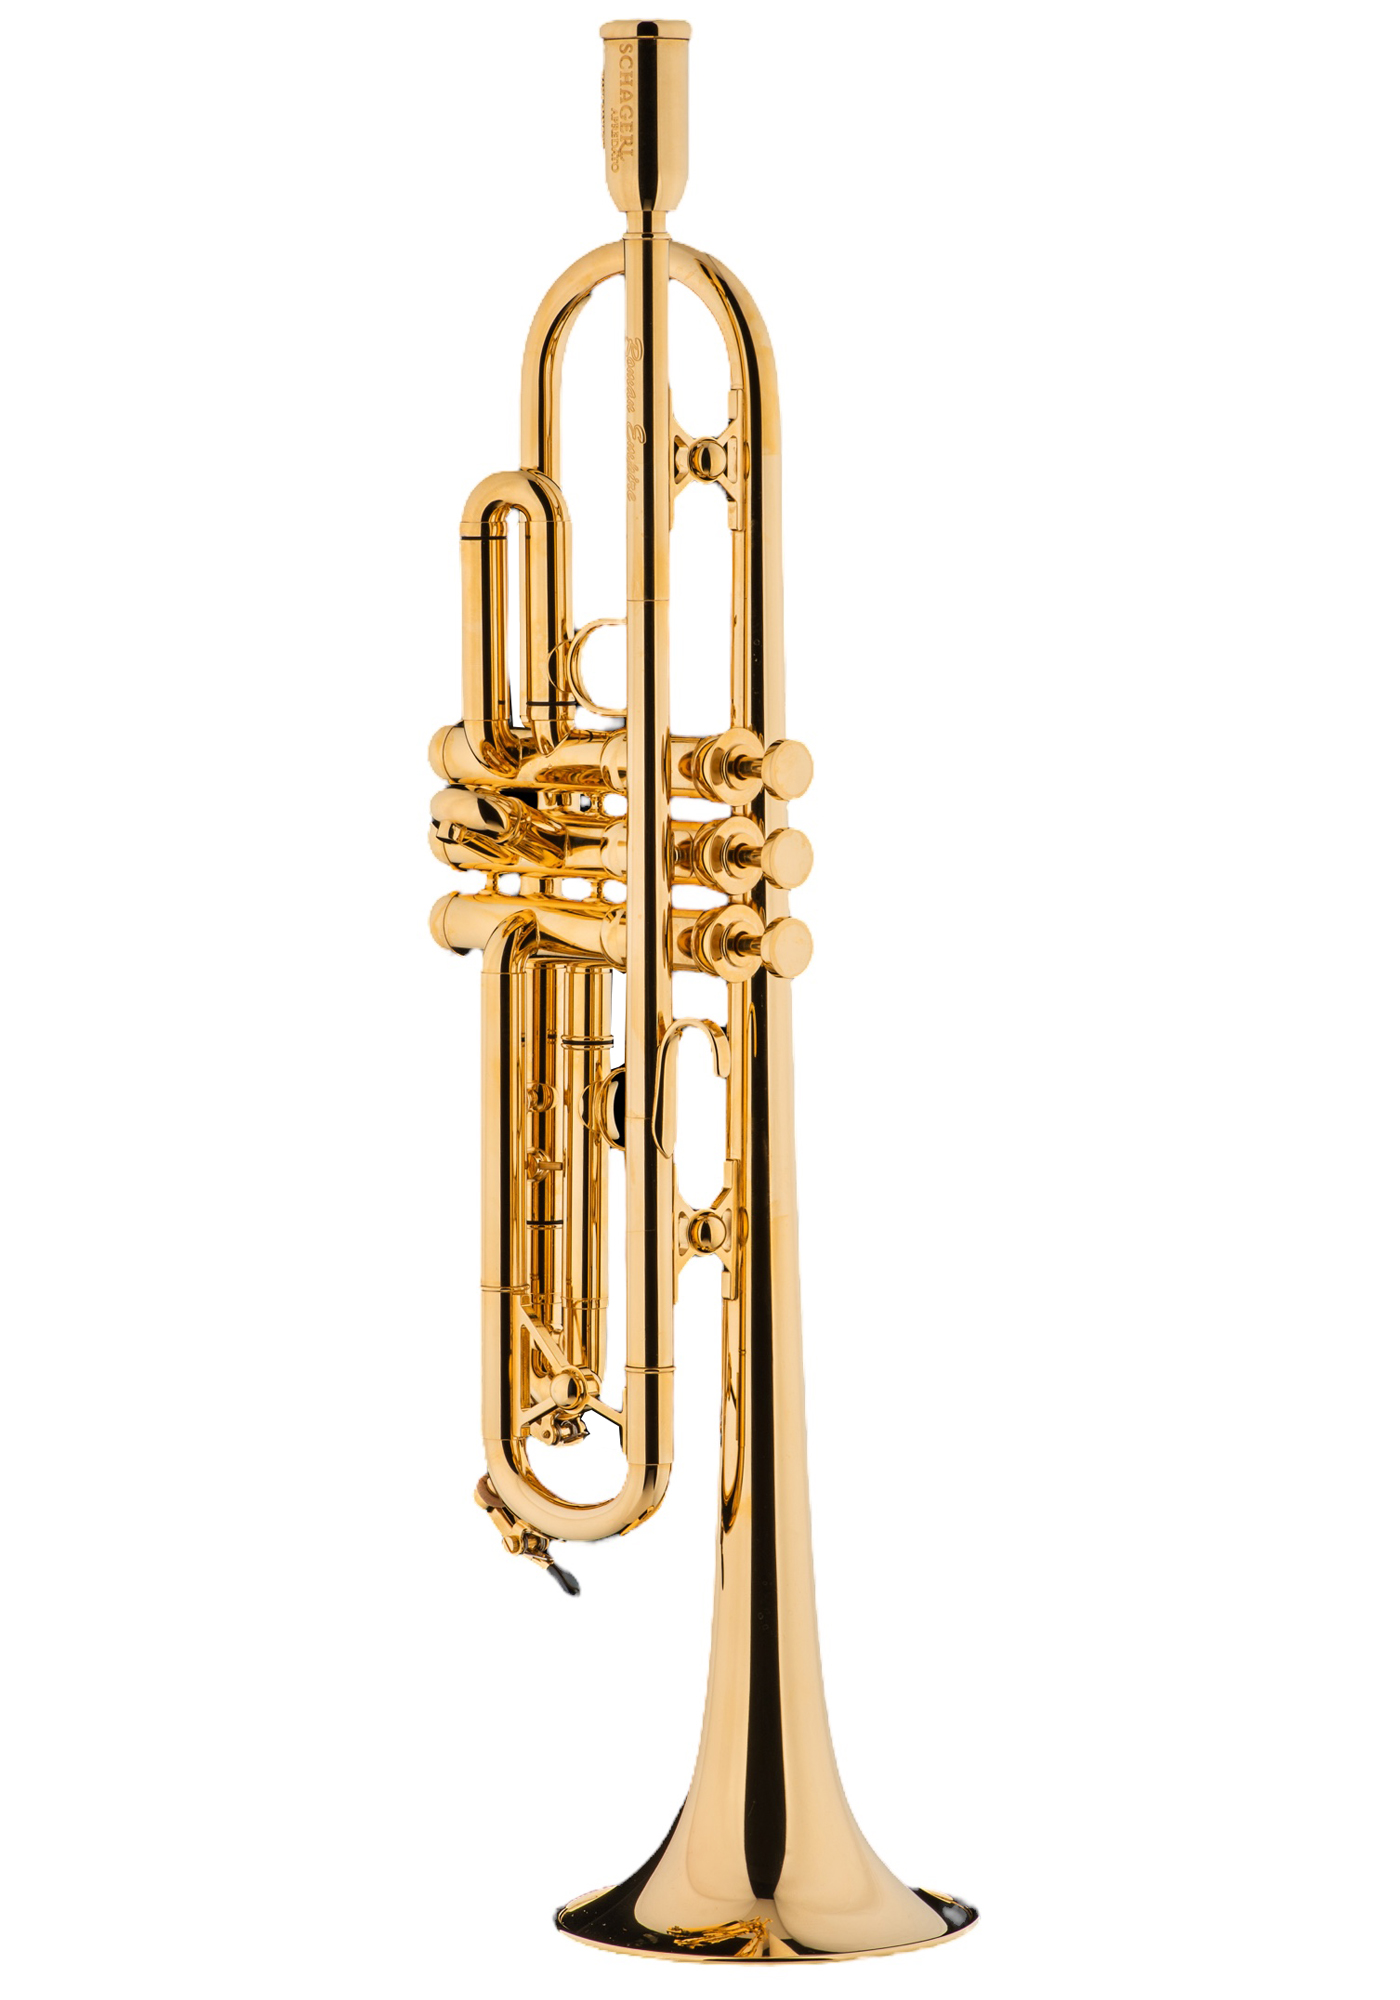 Schagerl Bb-Trumpet "ROMAN EMPIRE" gold plated